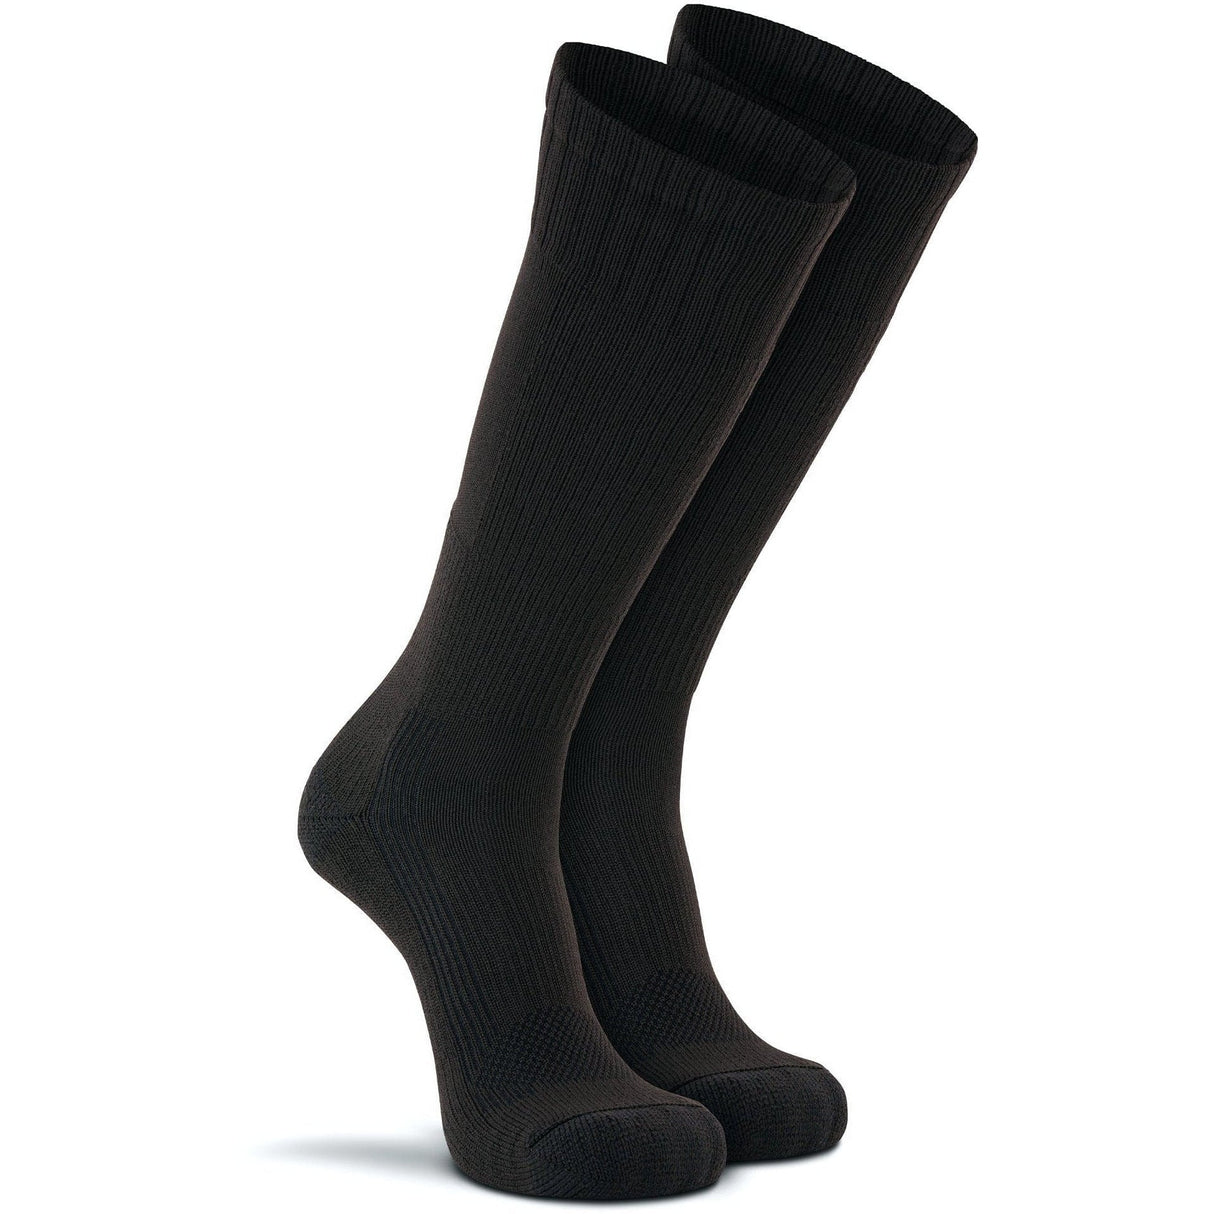 Fox River Military Tactical Boot Lightweight Mid-Calf Socks  -  Medium / Black